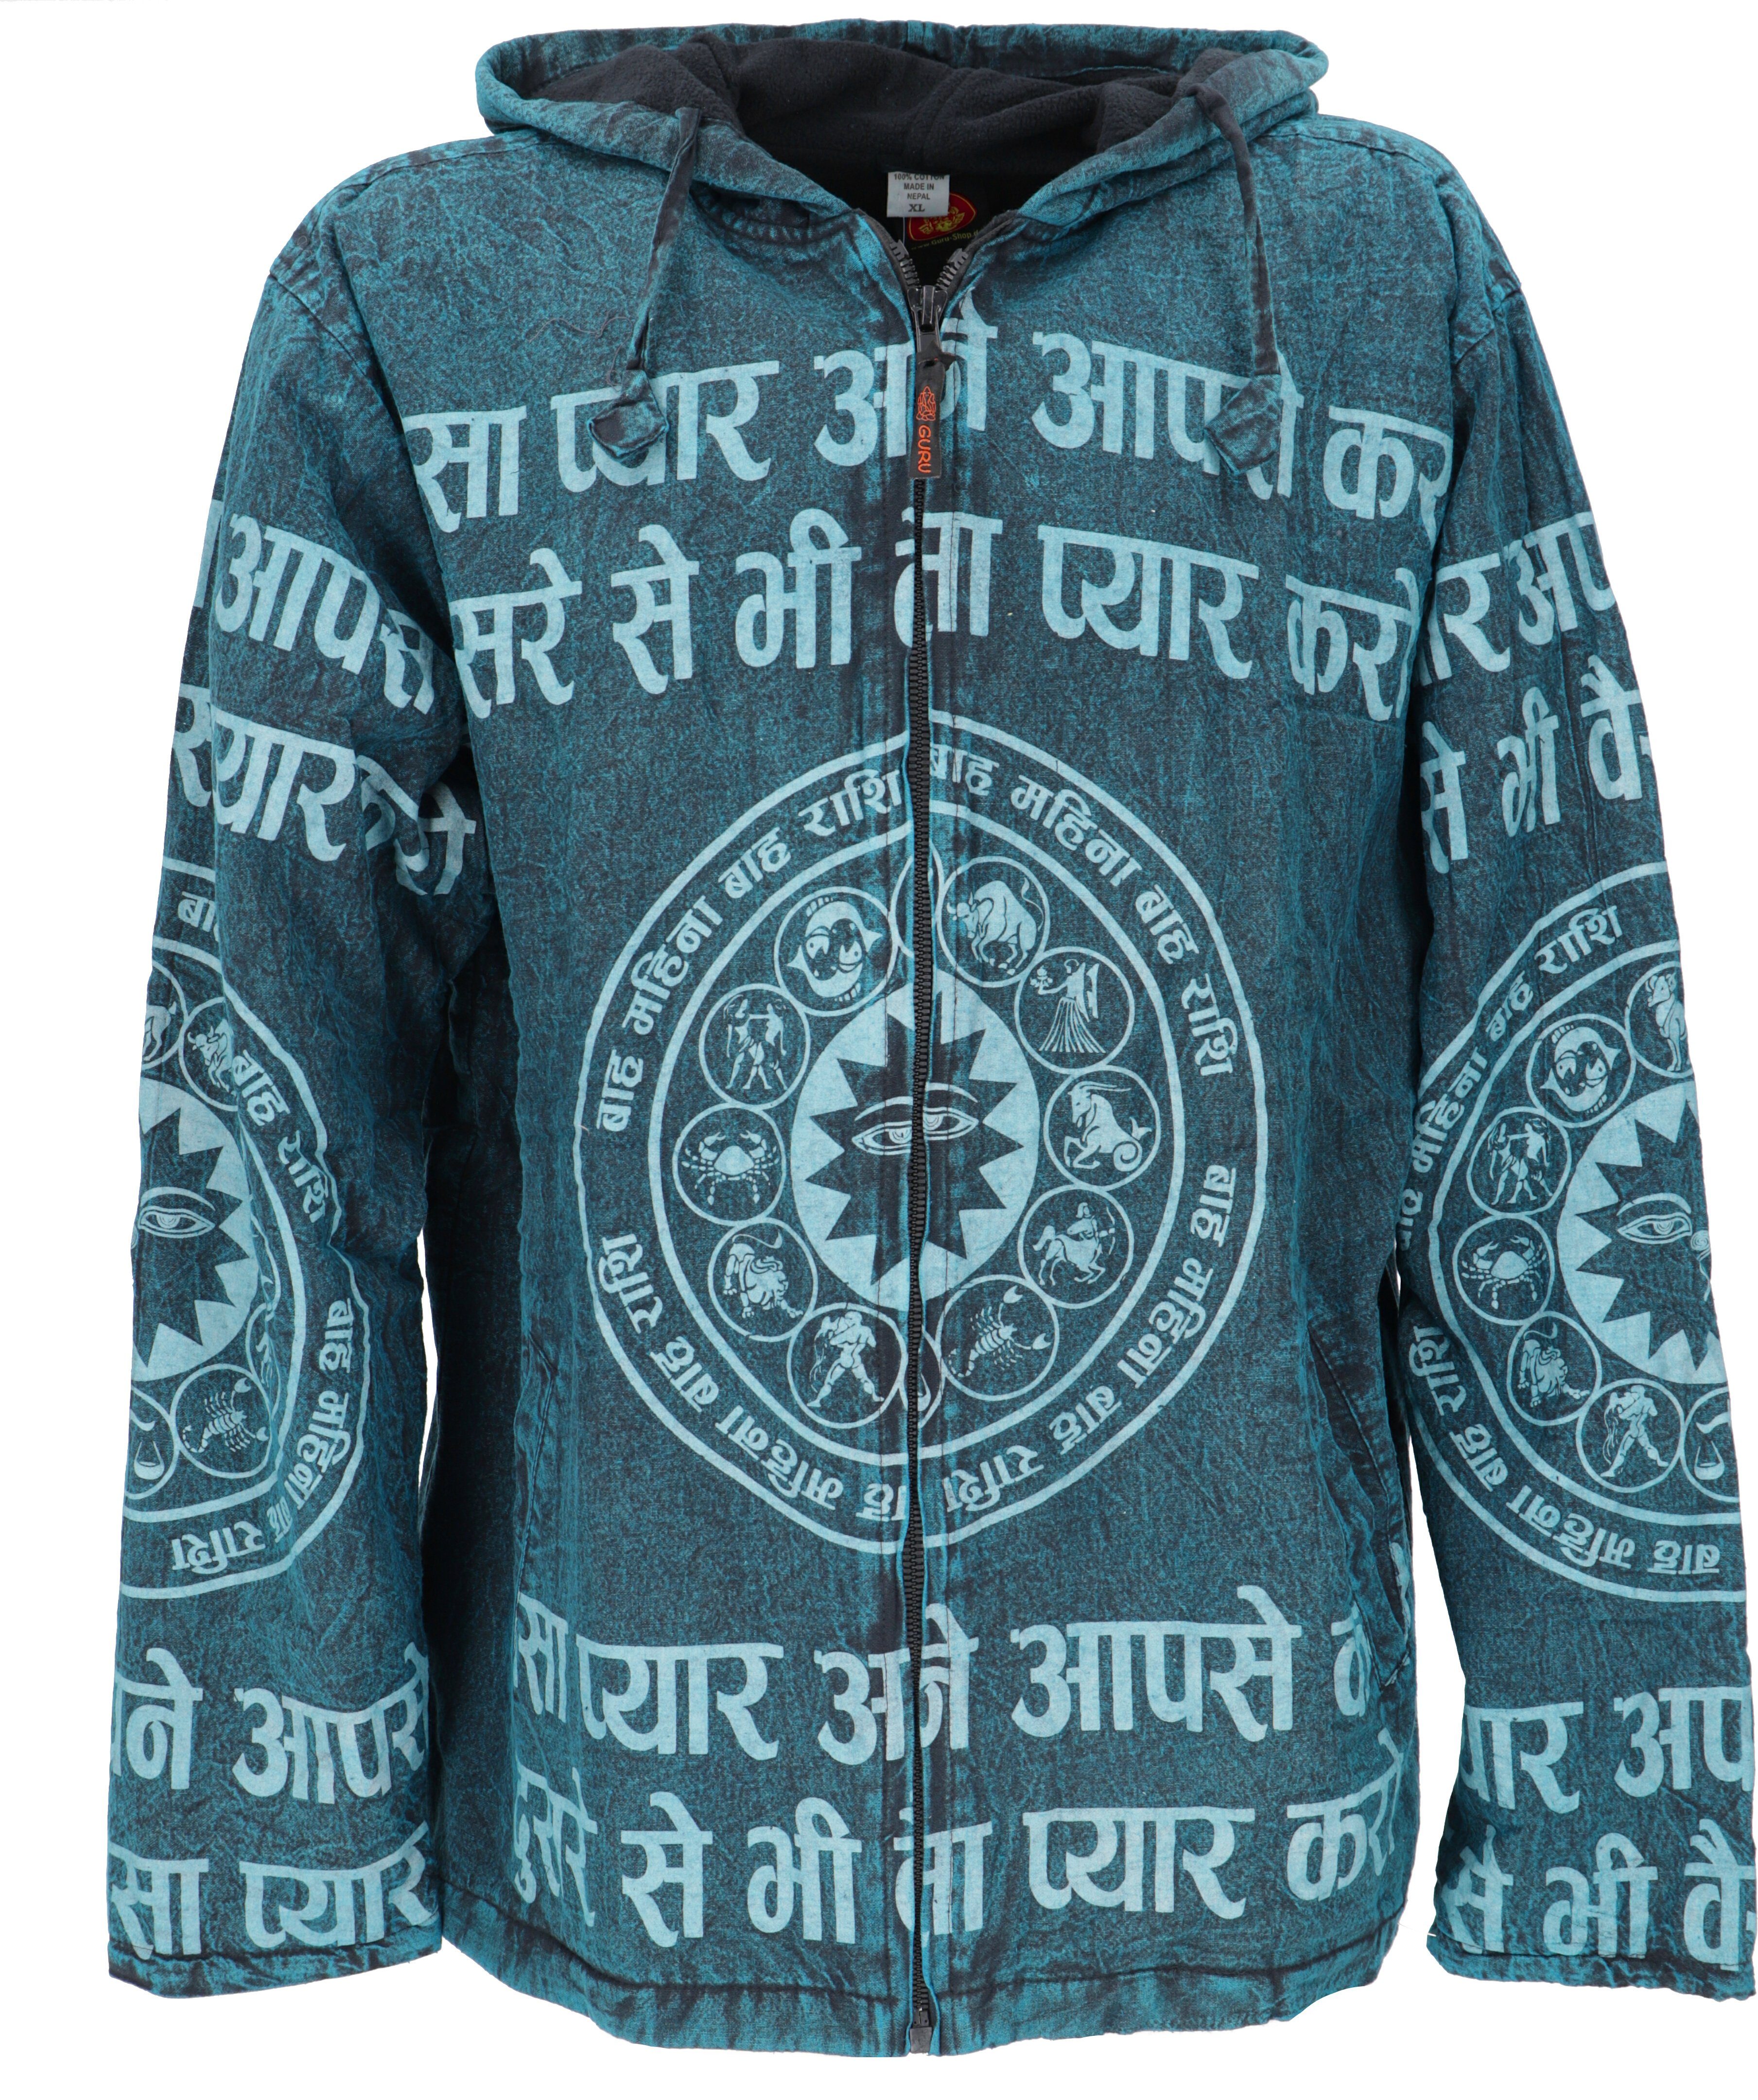 Guru-Shop Strickjacke Goa Jacke, Ethno Hoody mit Mantra Druck - petrol alternative Bekleidung